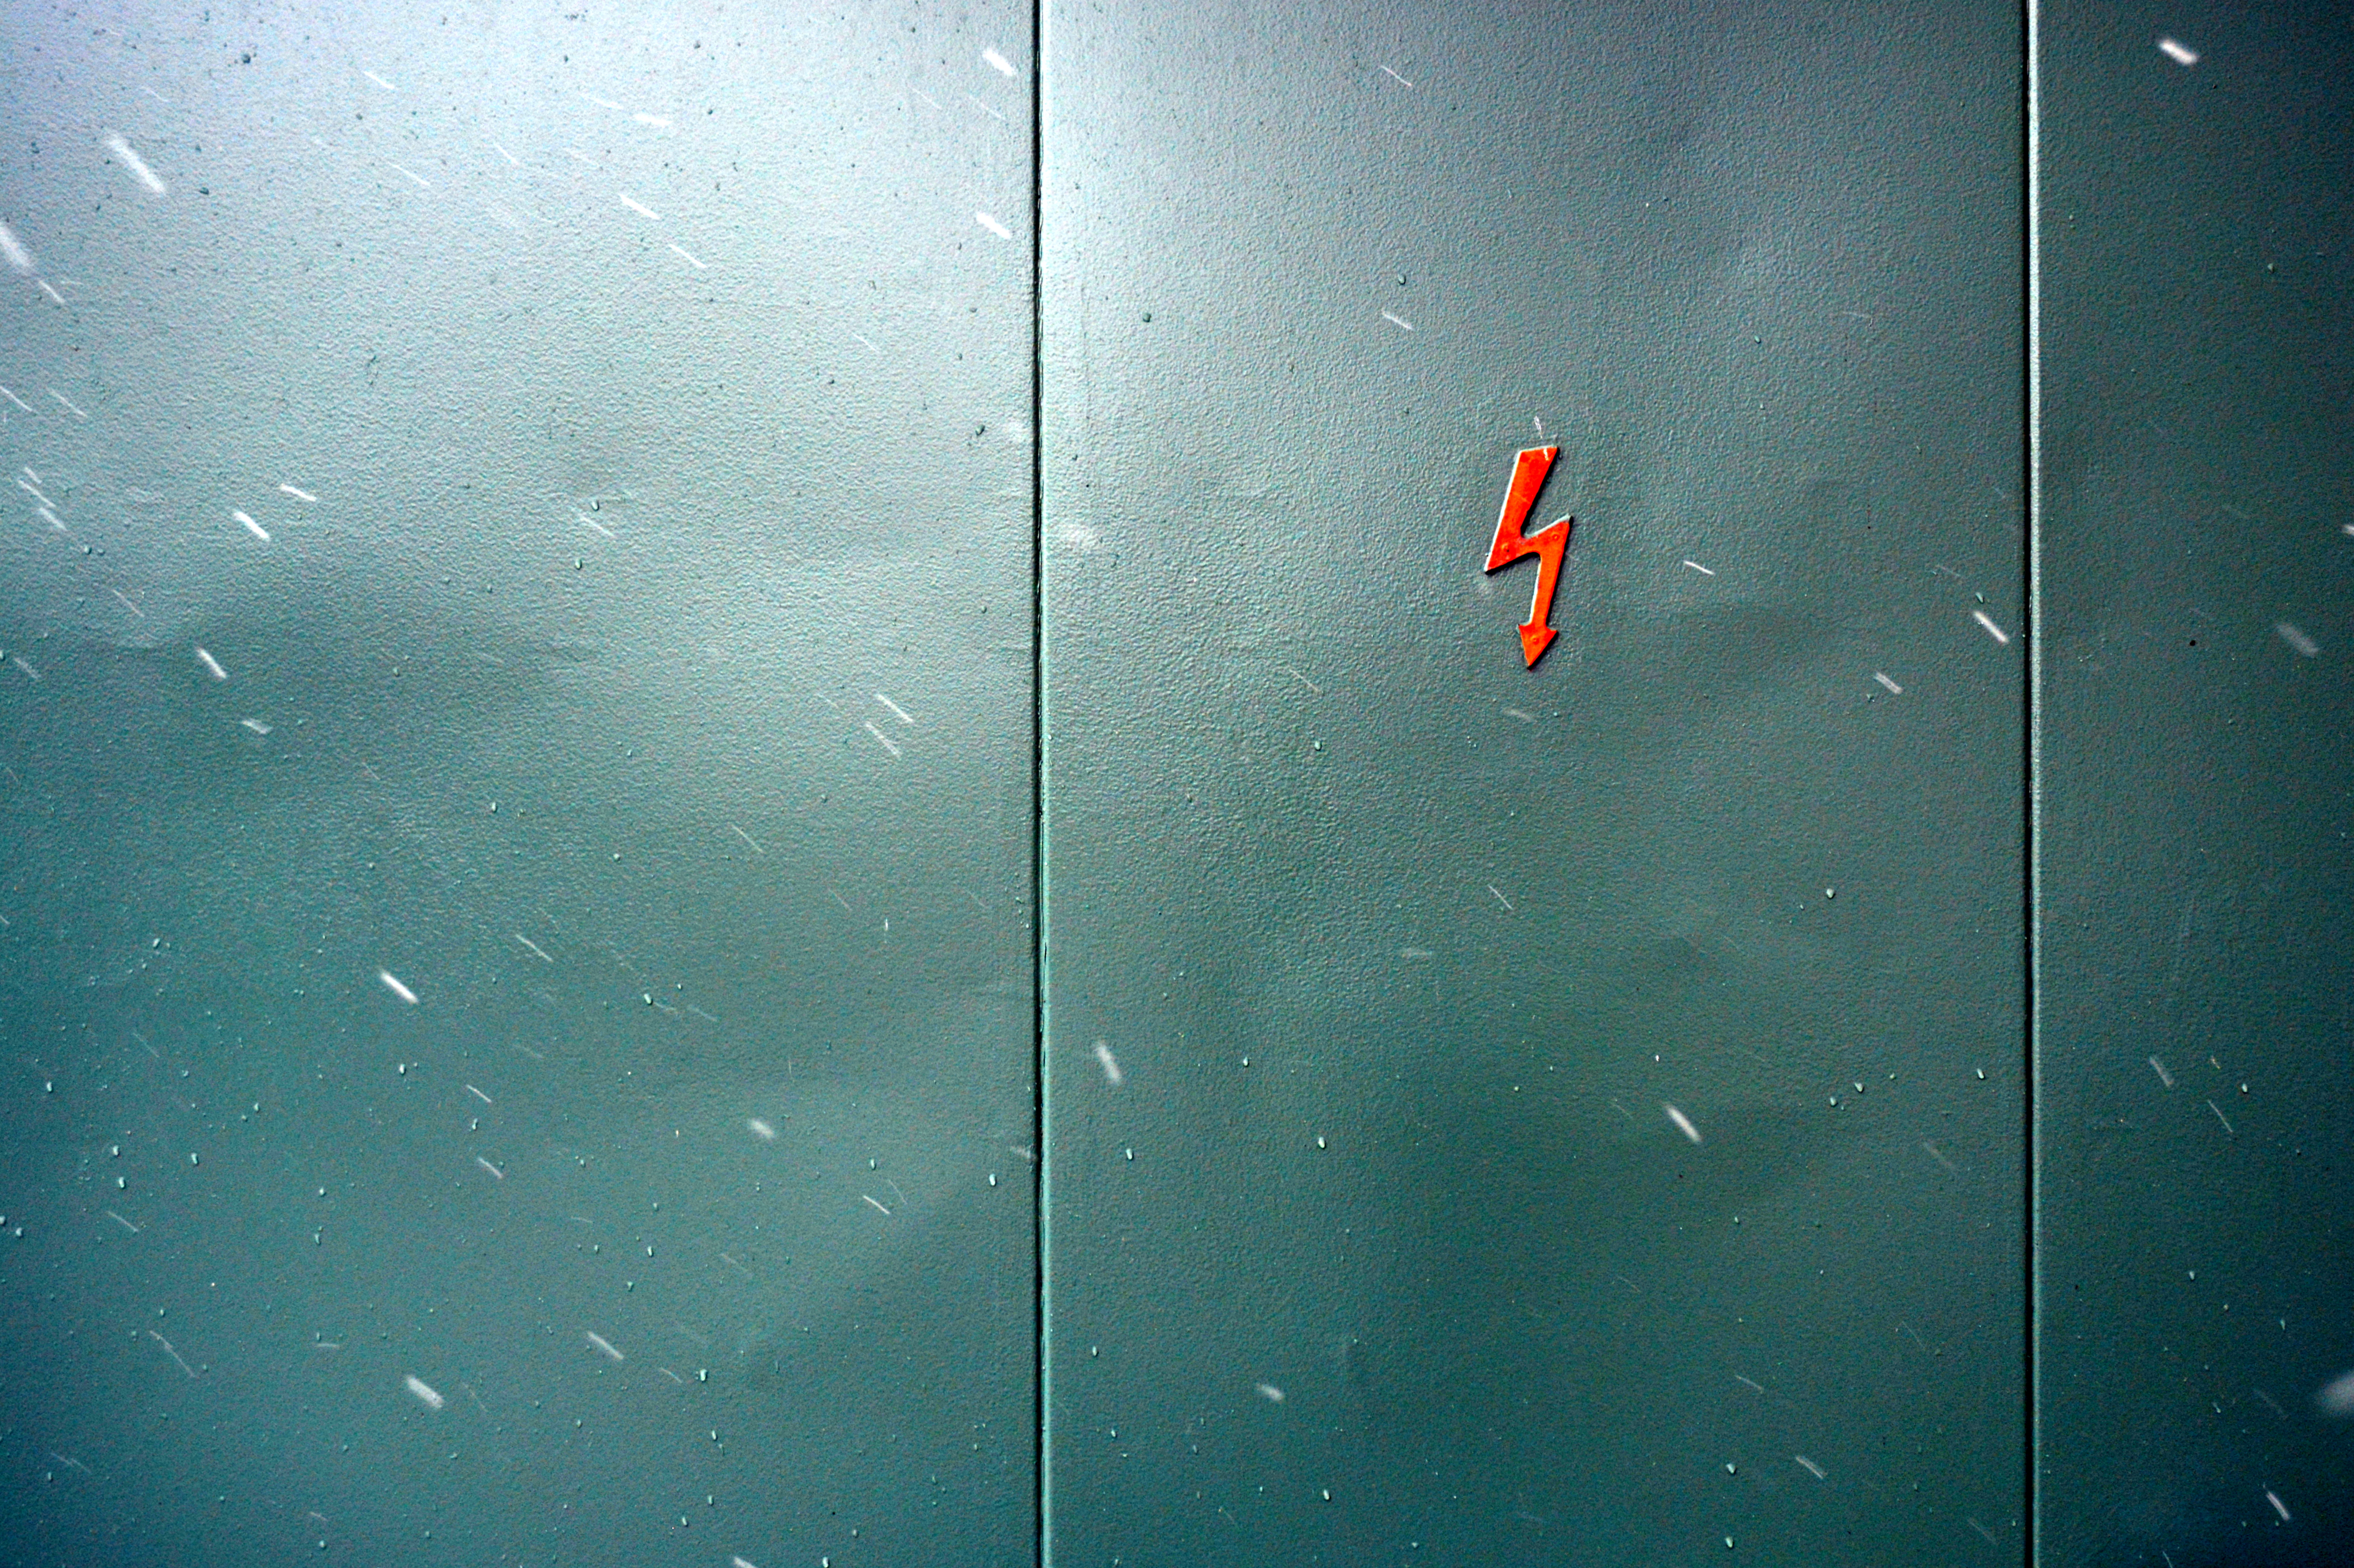 lightning, miscellanea, miscellaneous, wall, sign, door, danger